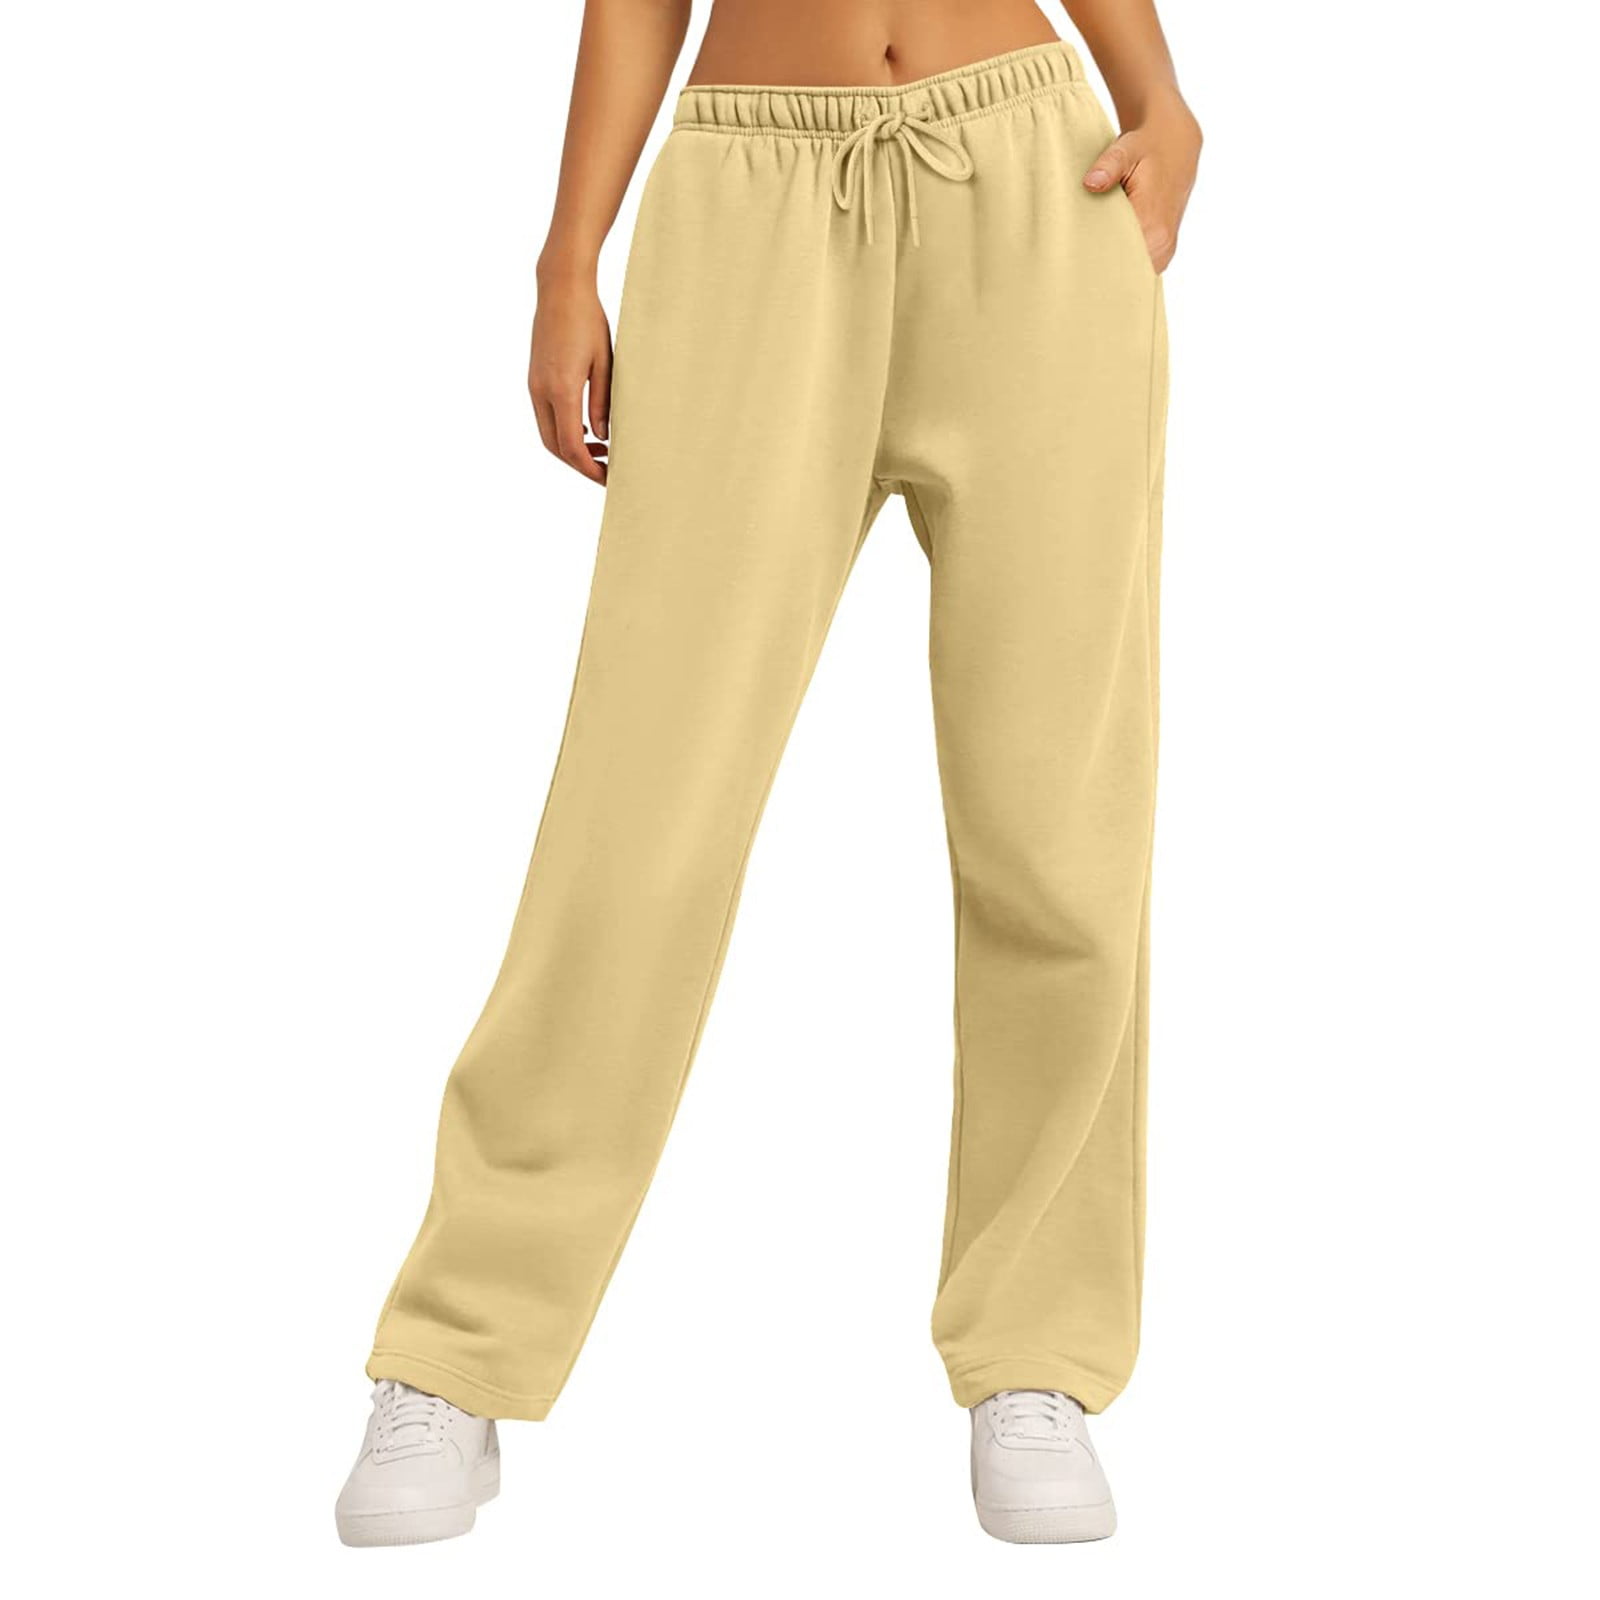 RPVATI Womens Sweatpants Cotton Solid Color Drawstring Baggy Pants High ...